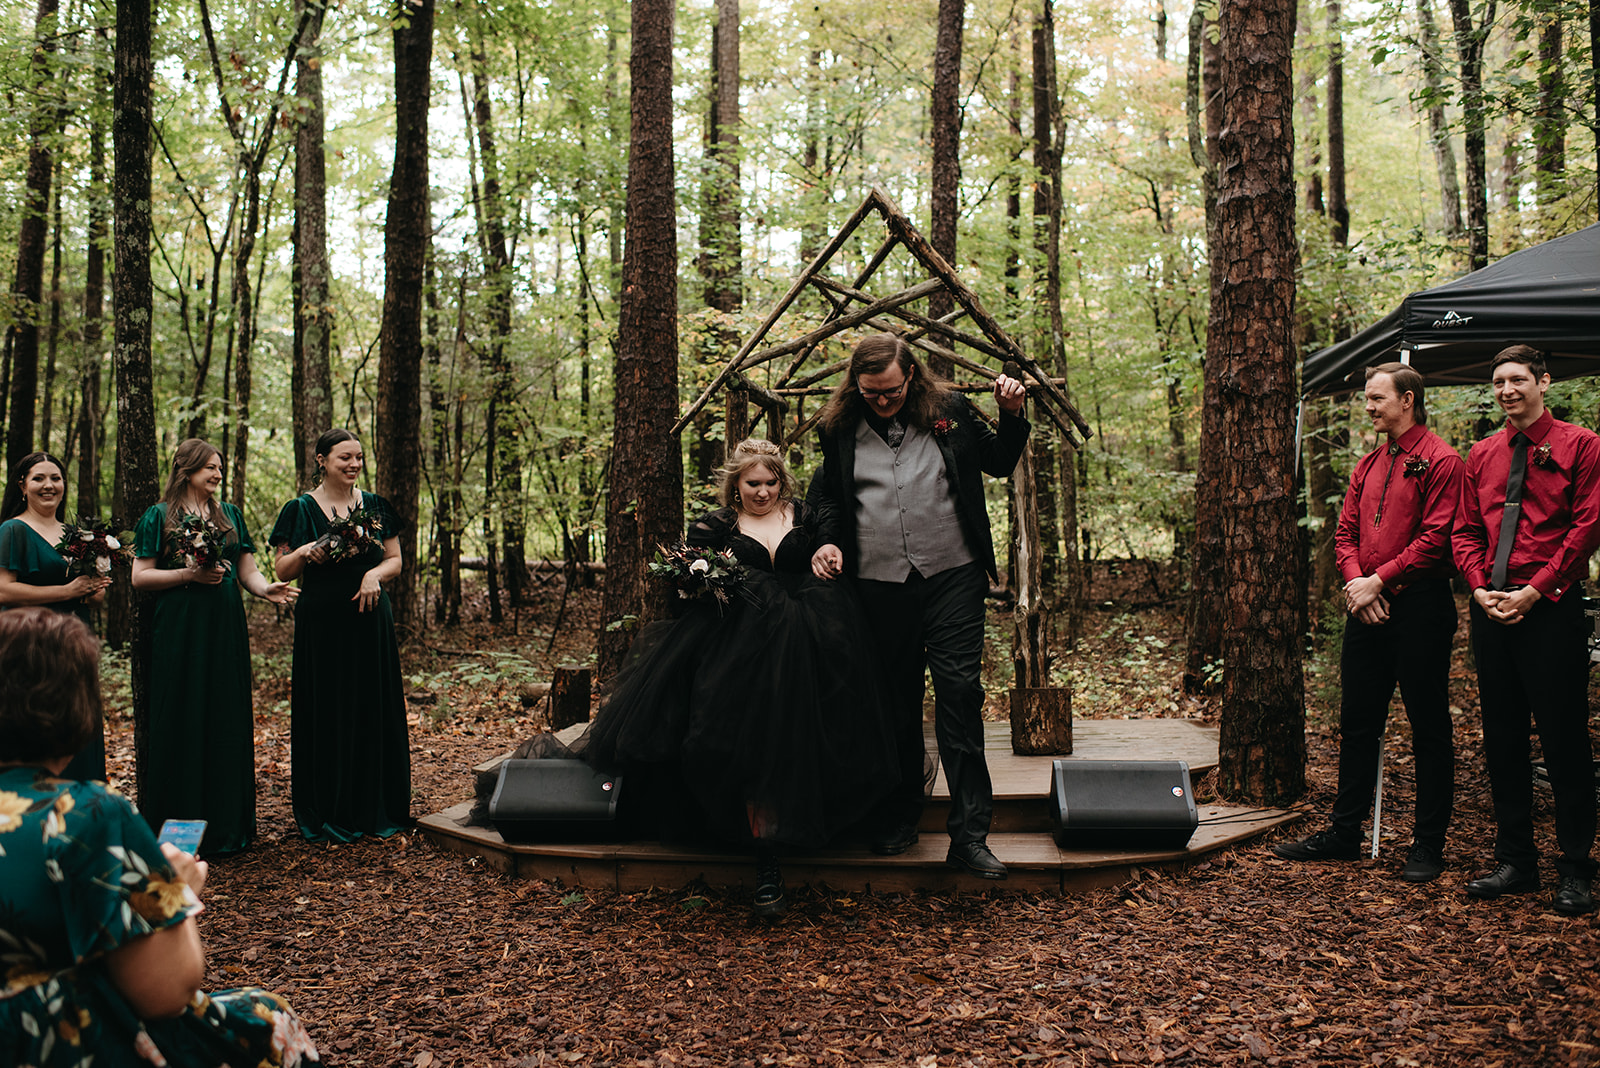 A rainy, gothic inspired wedding at Timberlake Earth Sanctuary in Whitsett North Carolina. 